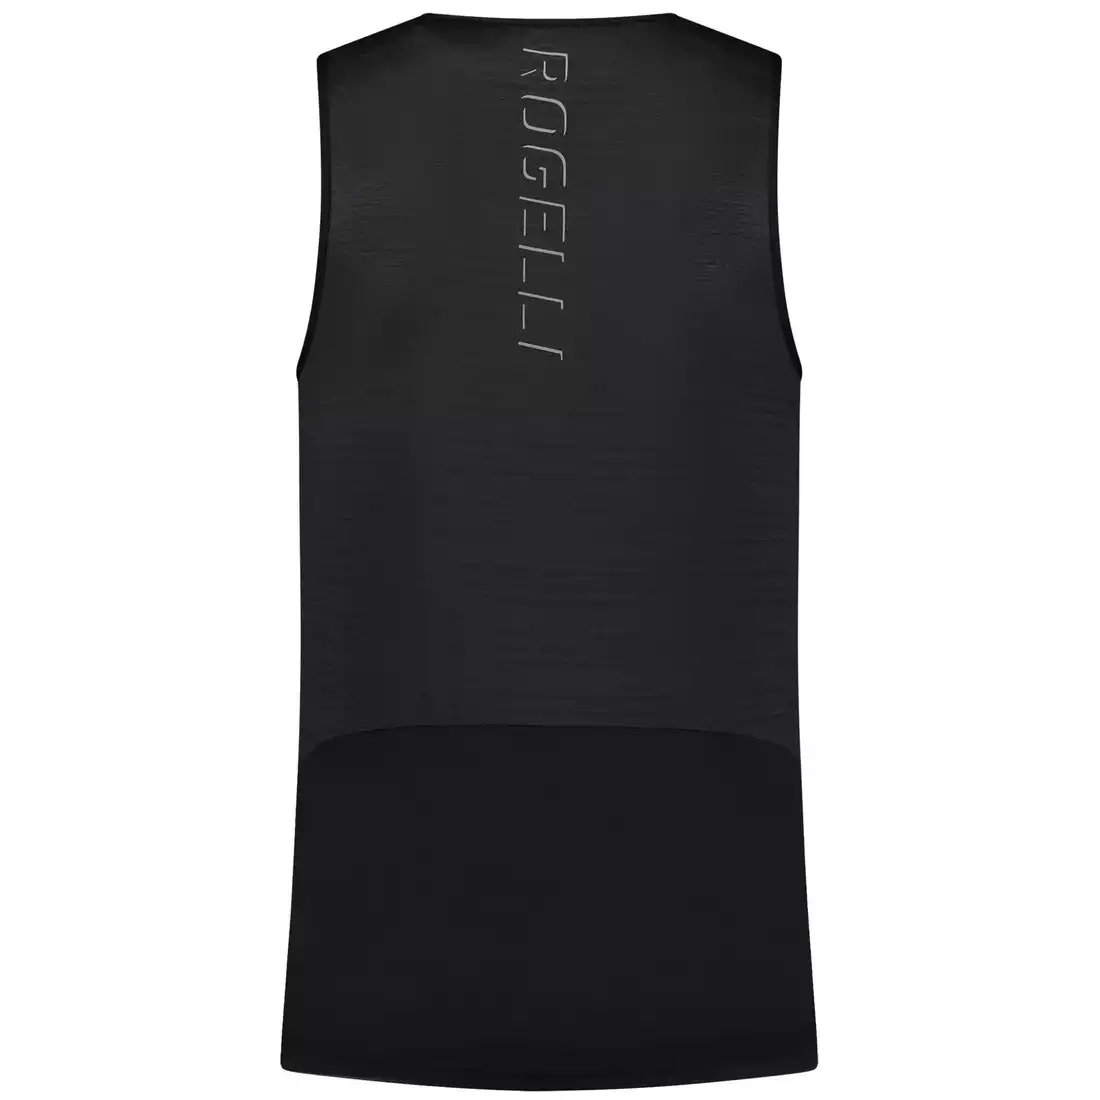 Rogelli CORE men's running vest, black